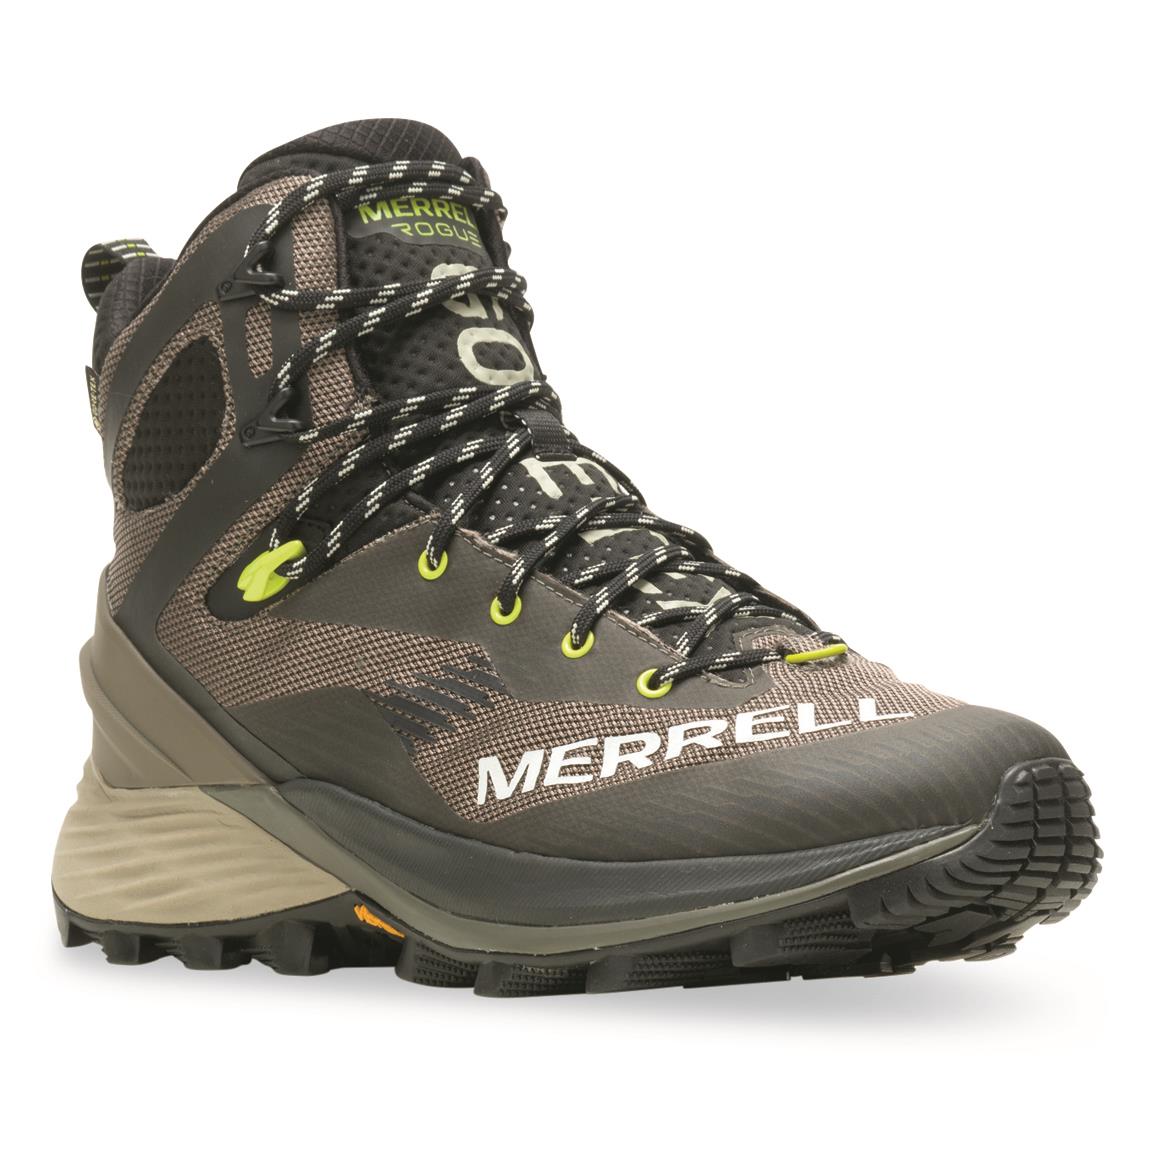 Merrell Men's Rogue Mid GTX Hiking Boots, Boulder